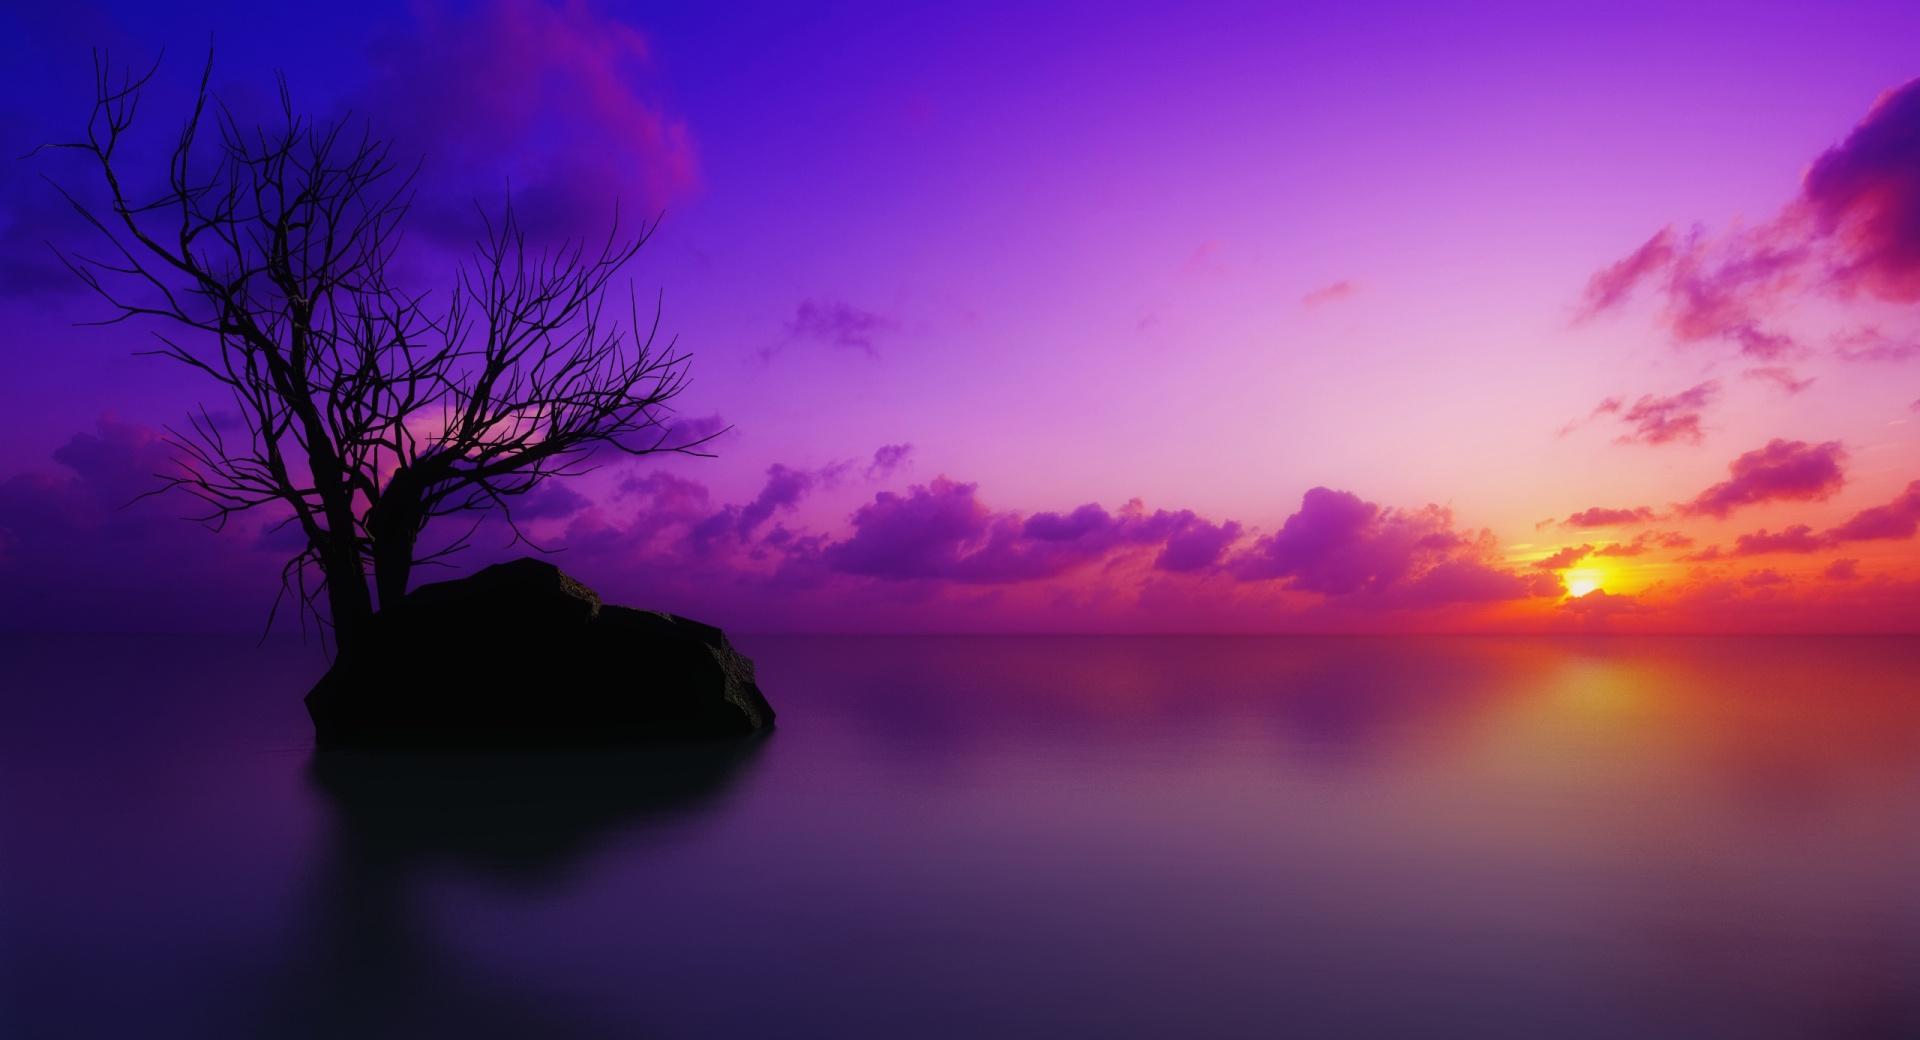 Maldivian Sunset at 1024 x 1024 iPad size wallpapers HD quality